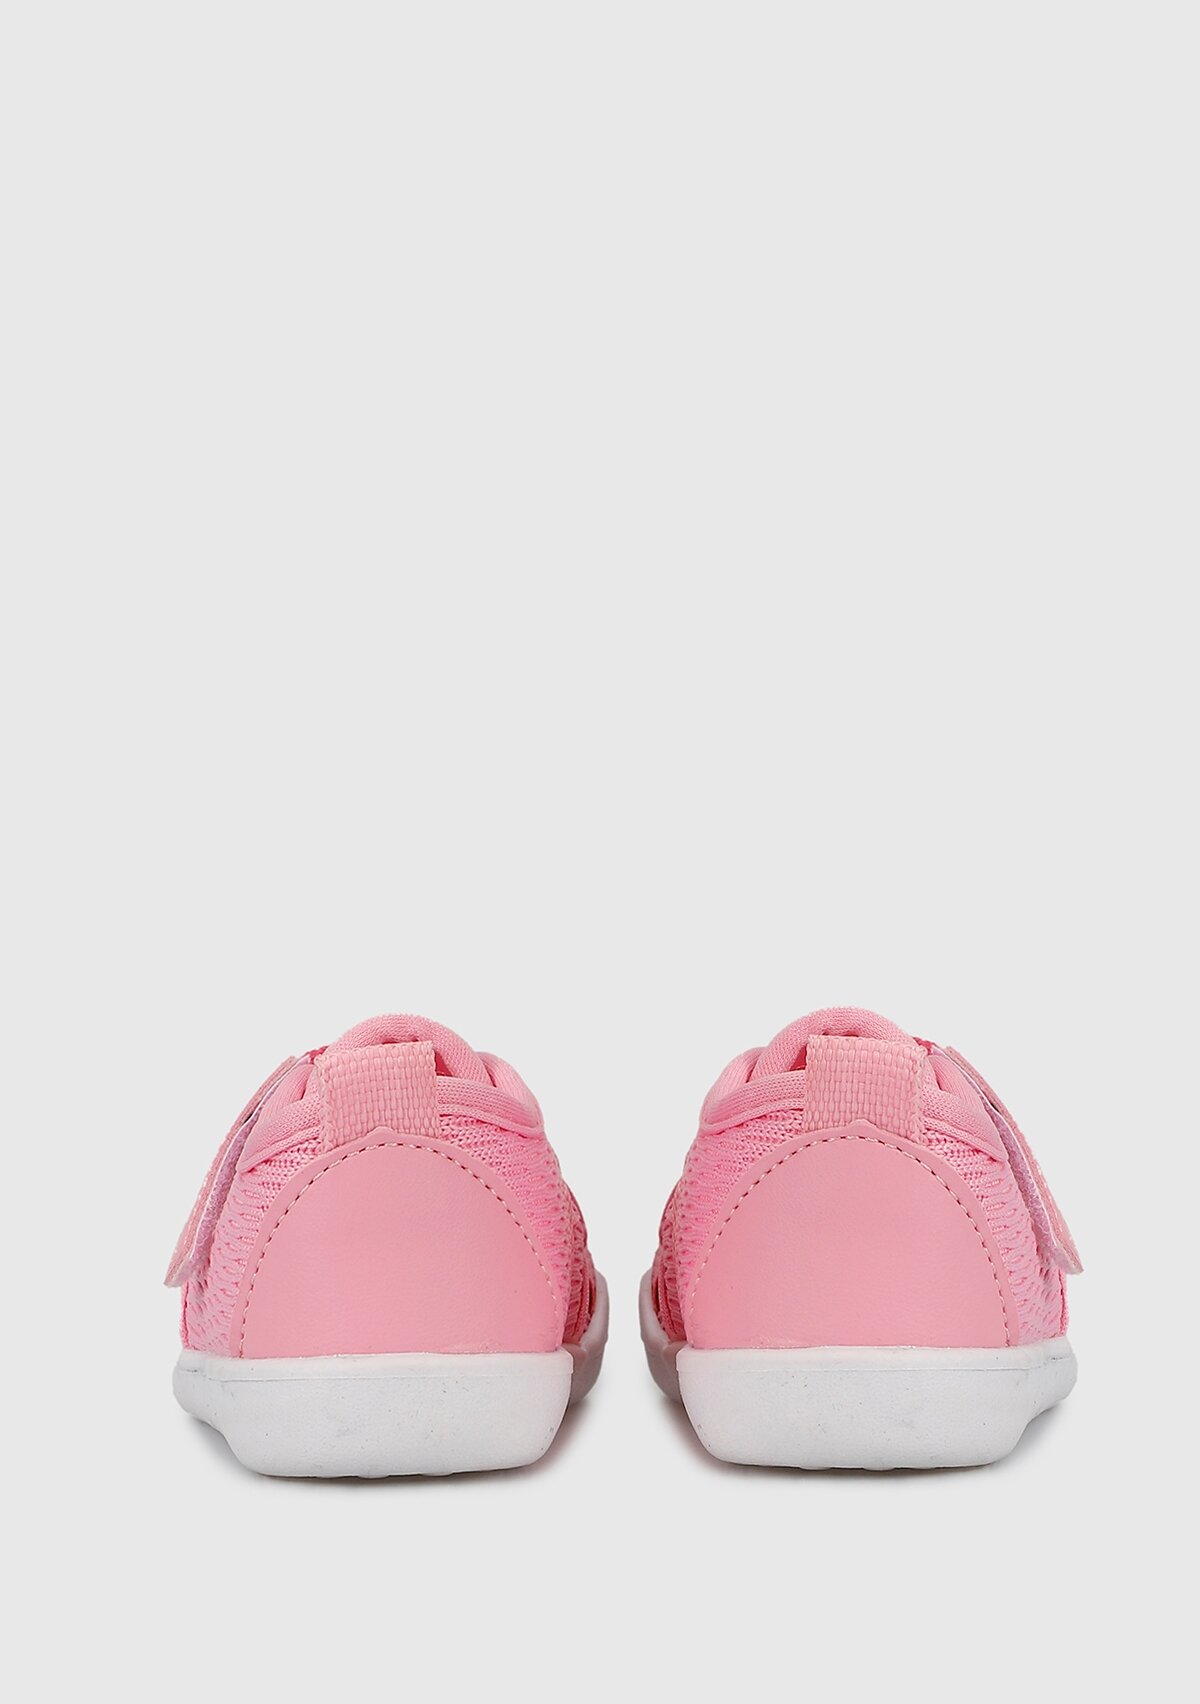 Kiddo Pembe Kız Çocuk Sneaker